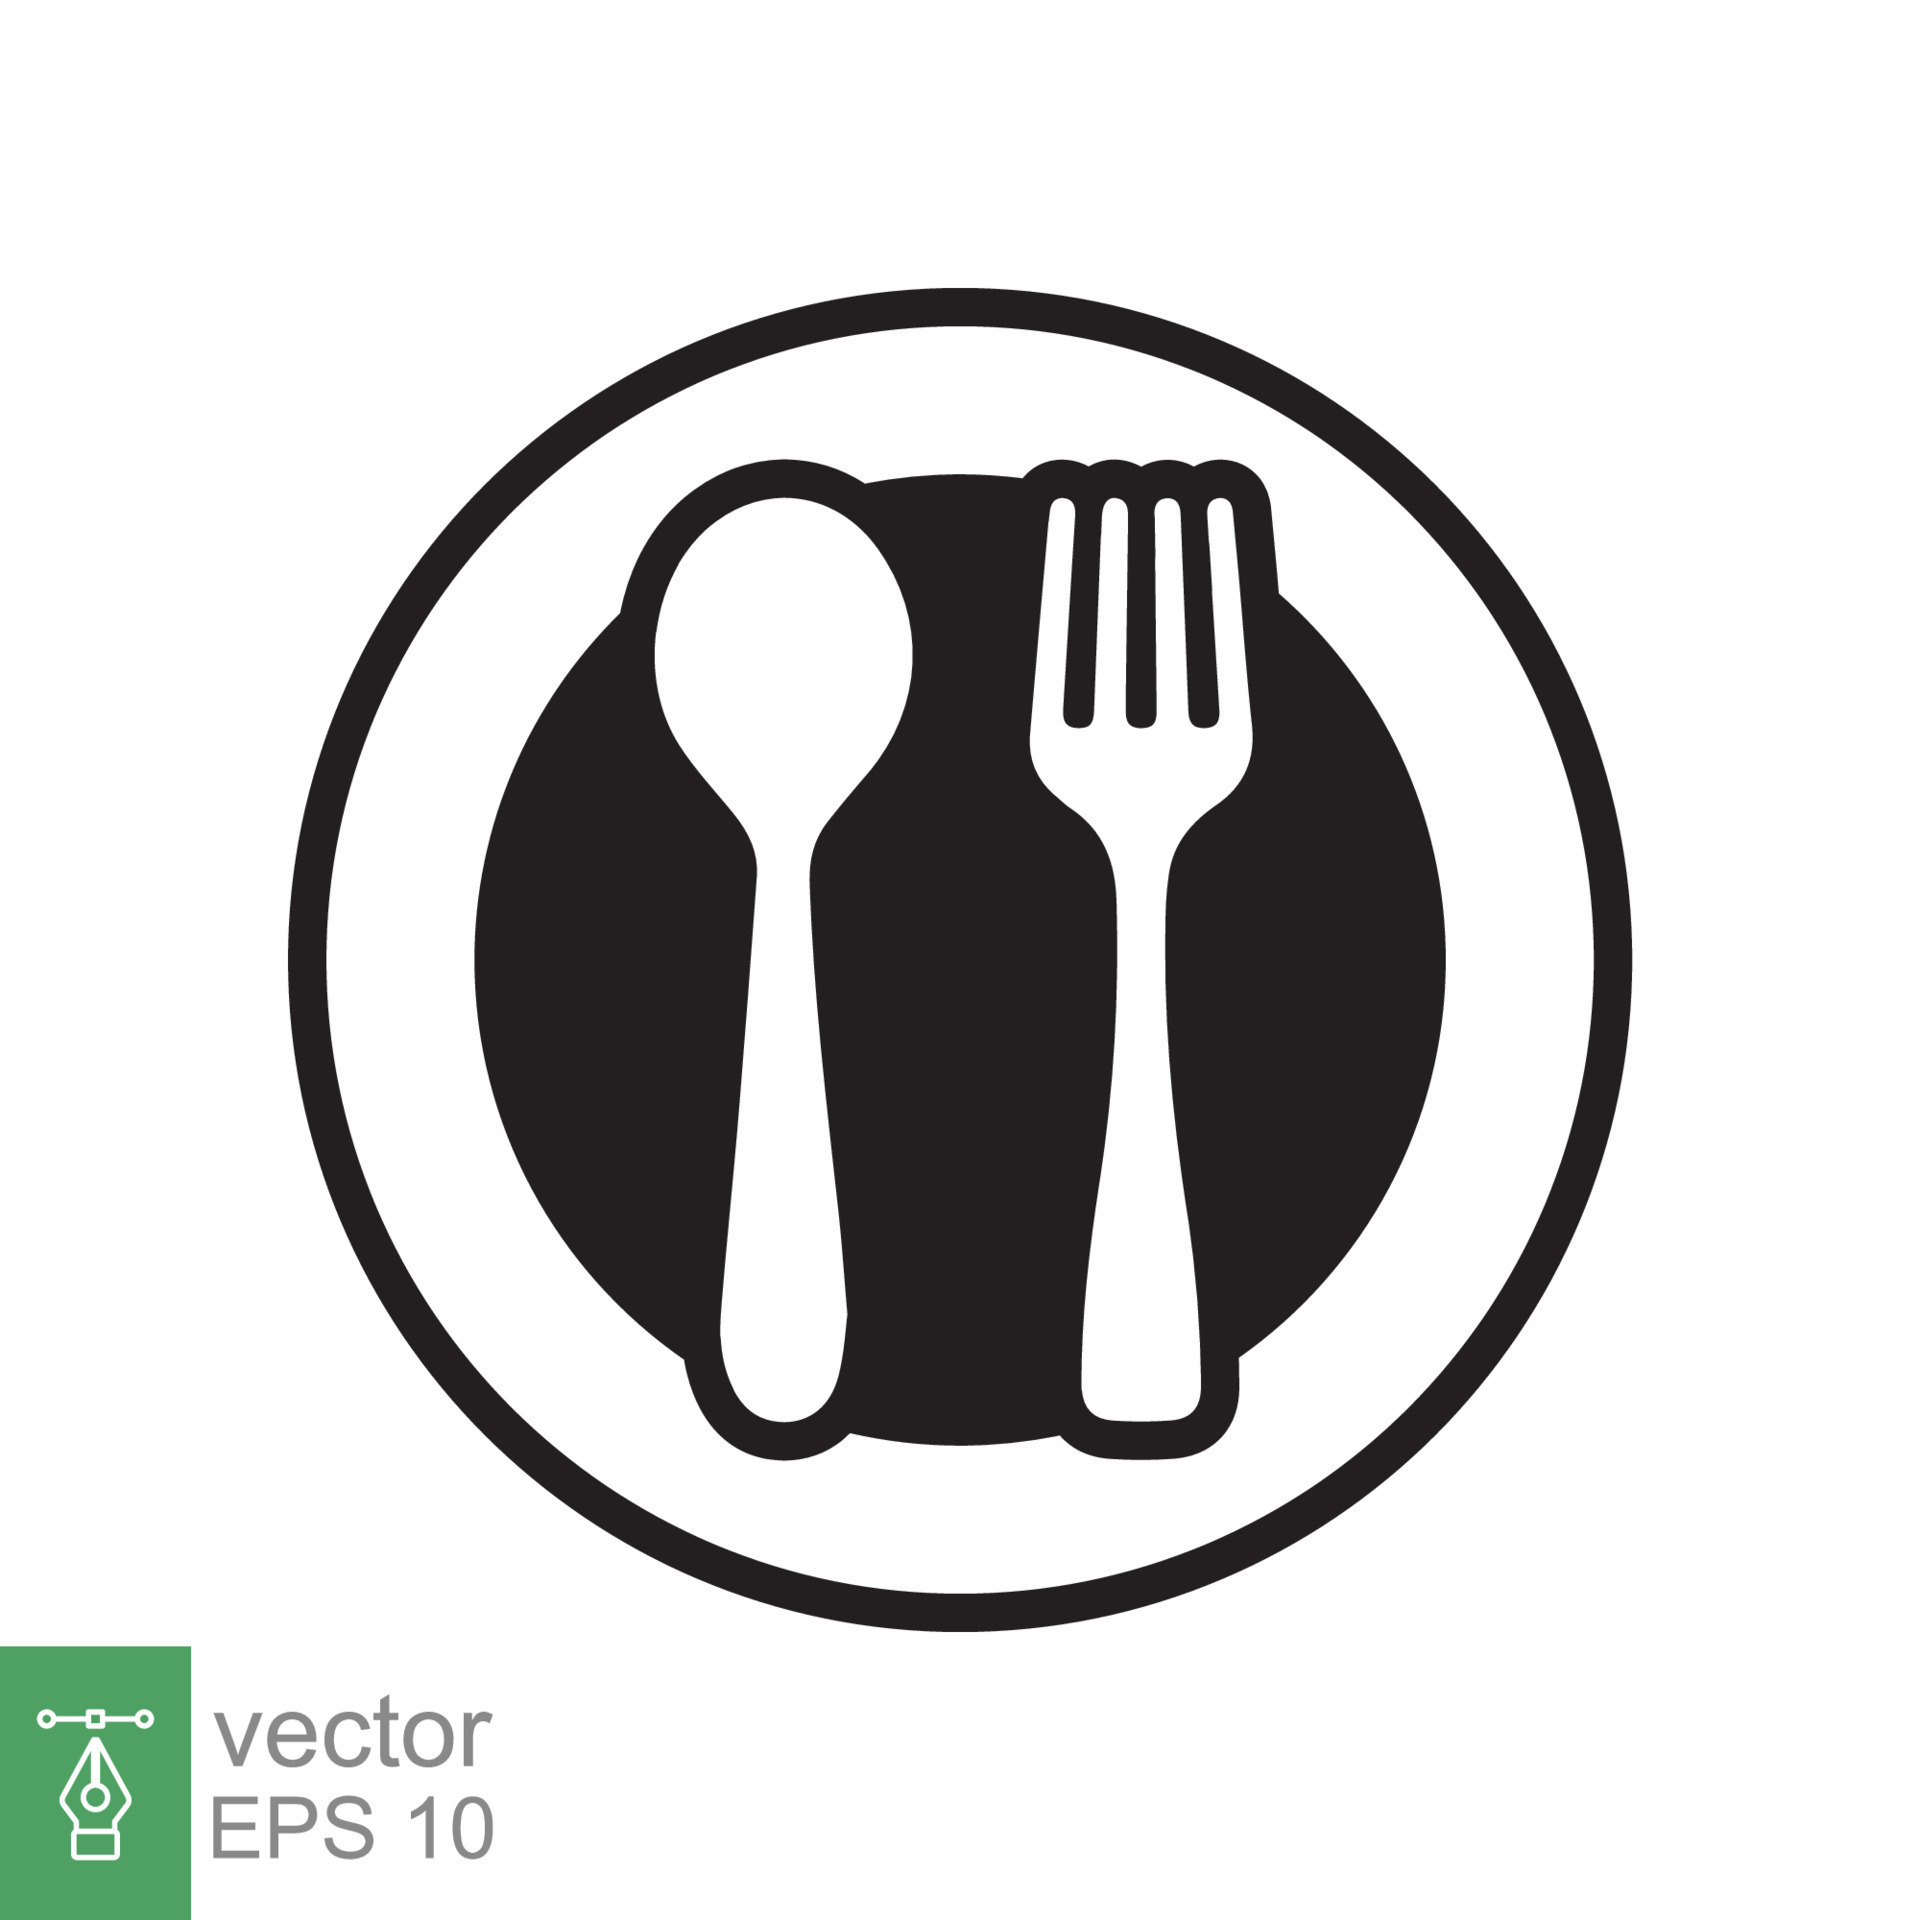 Fourchette Cuillère Couteau Couverts Cuisine Ustensiles Silhouette Vector  Icon Set